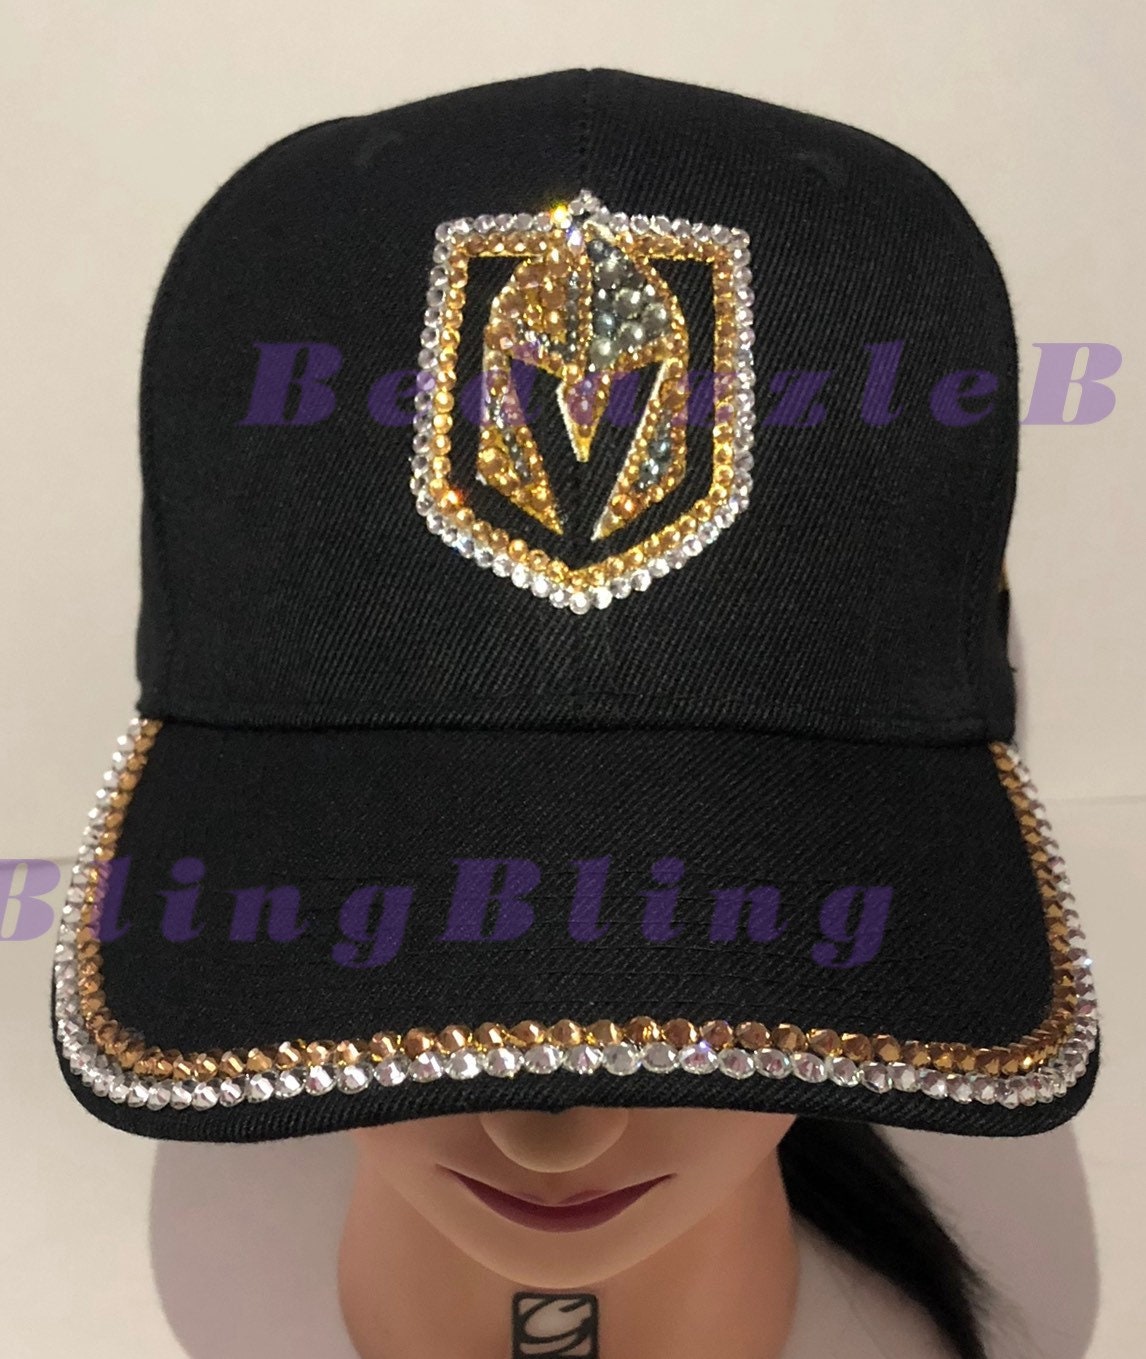 & truckerspetten Accessoires Hoeden & petten Honkbal Golden Knights Red 47 Hat Hand jeweled VGK NHL Cap with SWAROVSKI Crystals amazing detail 